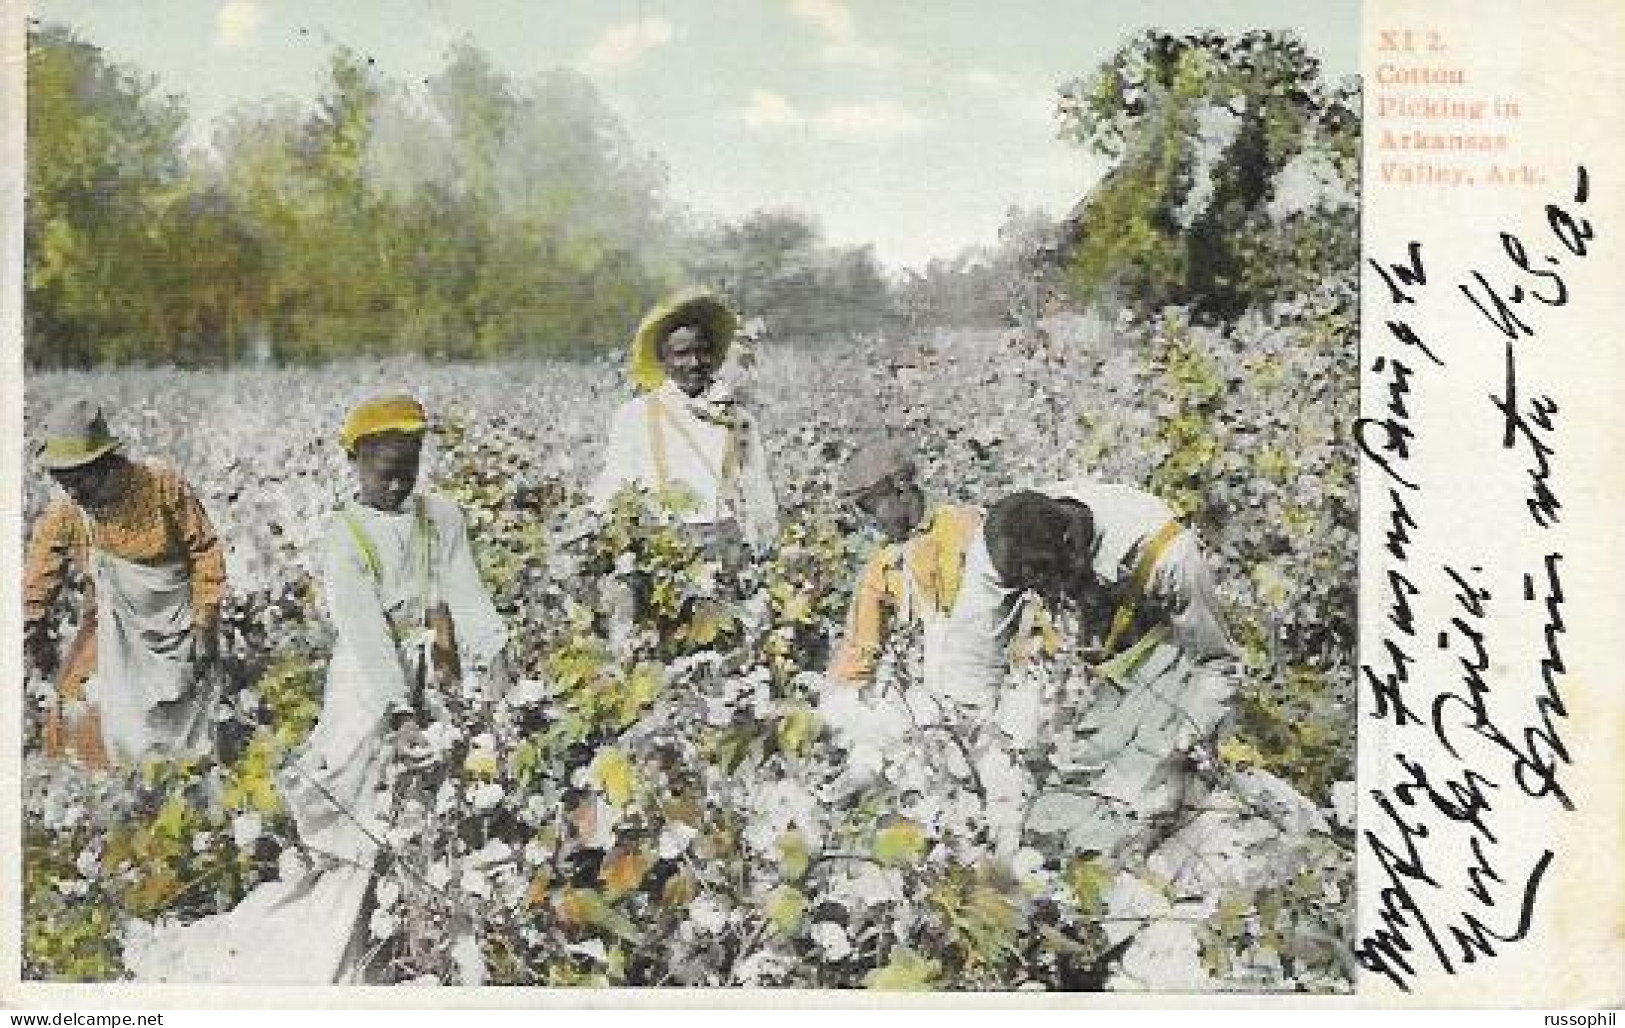 USA - BLACK AMERICANA - COTTON PICKING IN ARKANSAS VALLEY, ARK. - 1906 - Black Americana